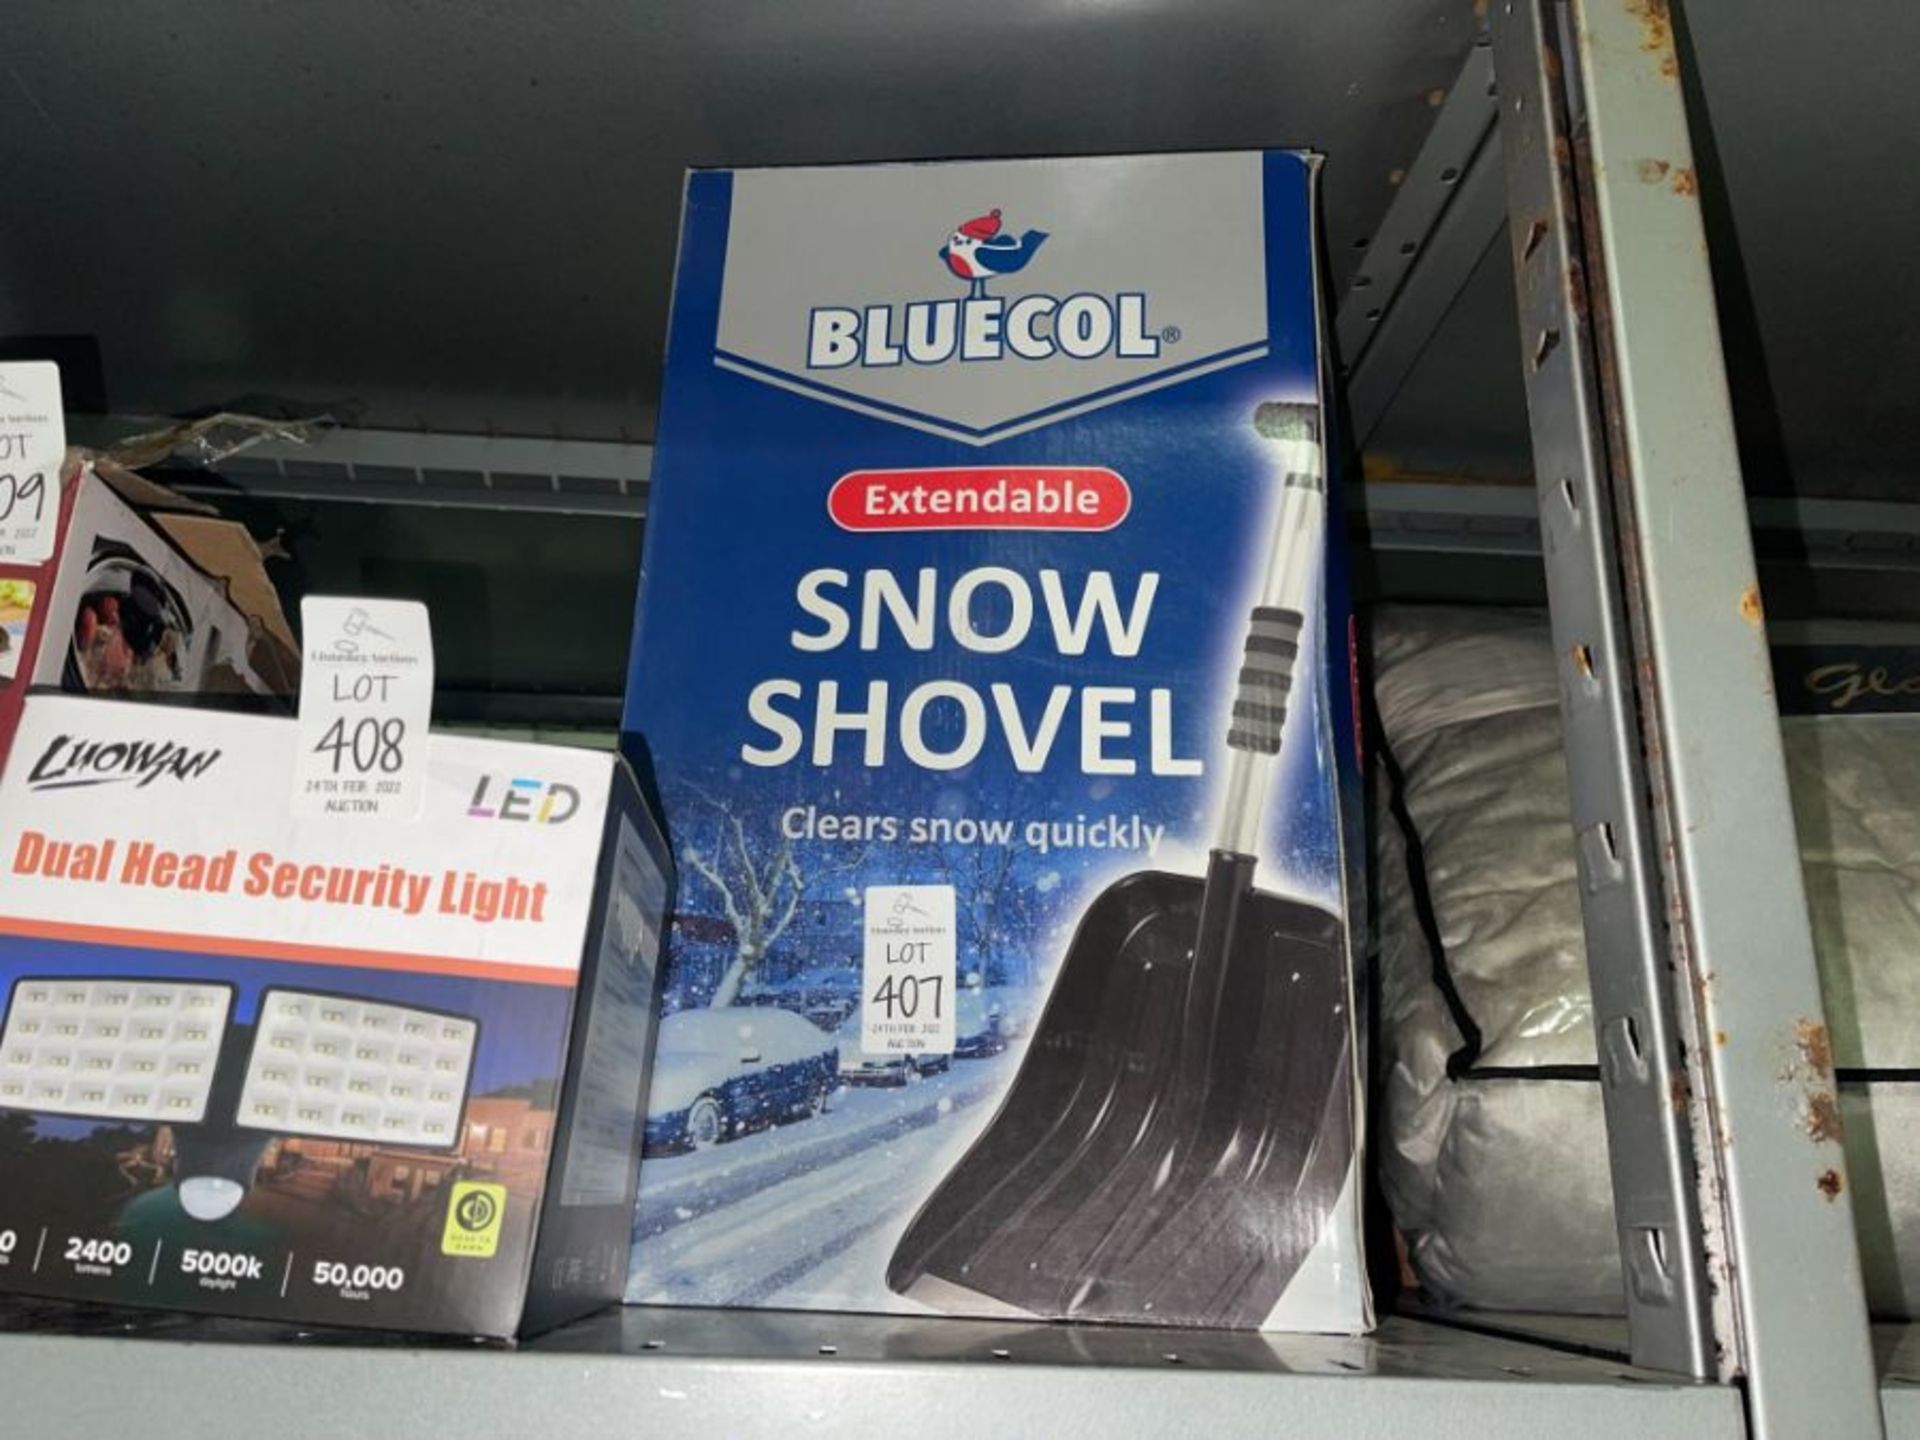 BLUECOL EXTENDABLE SNOW SHOVEL